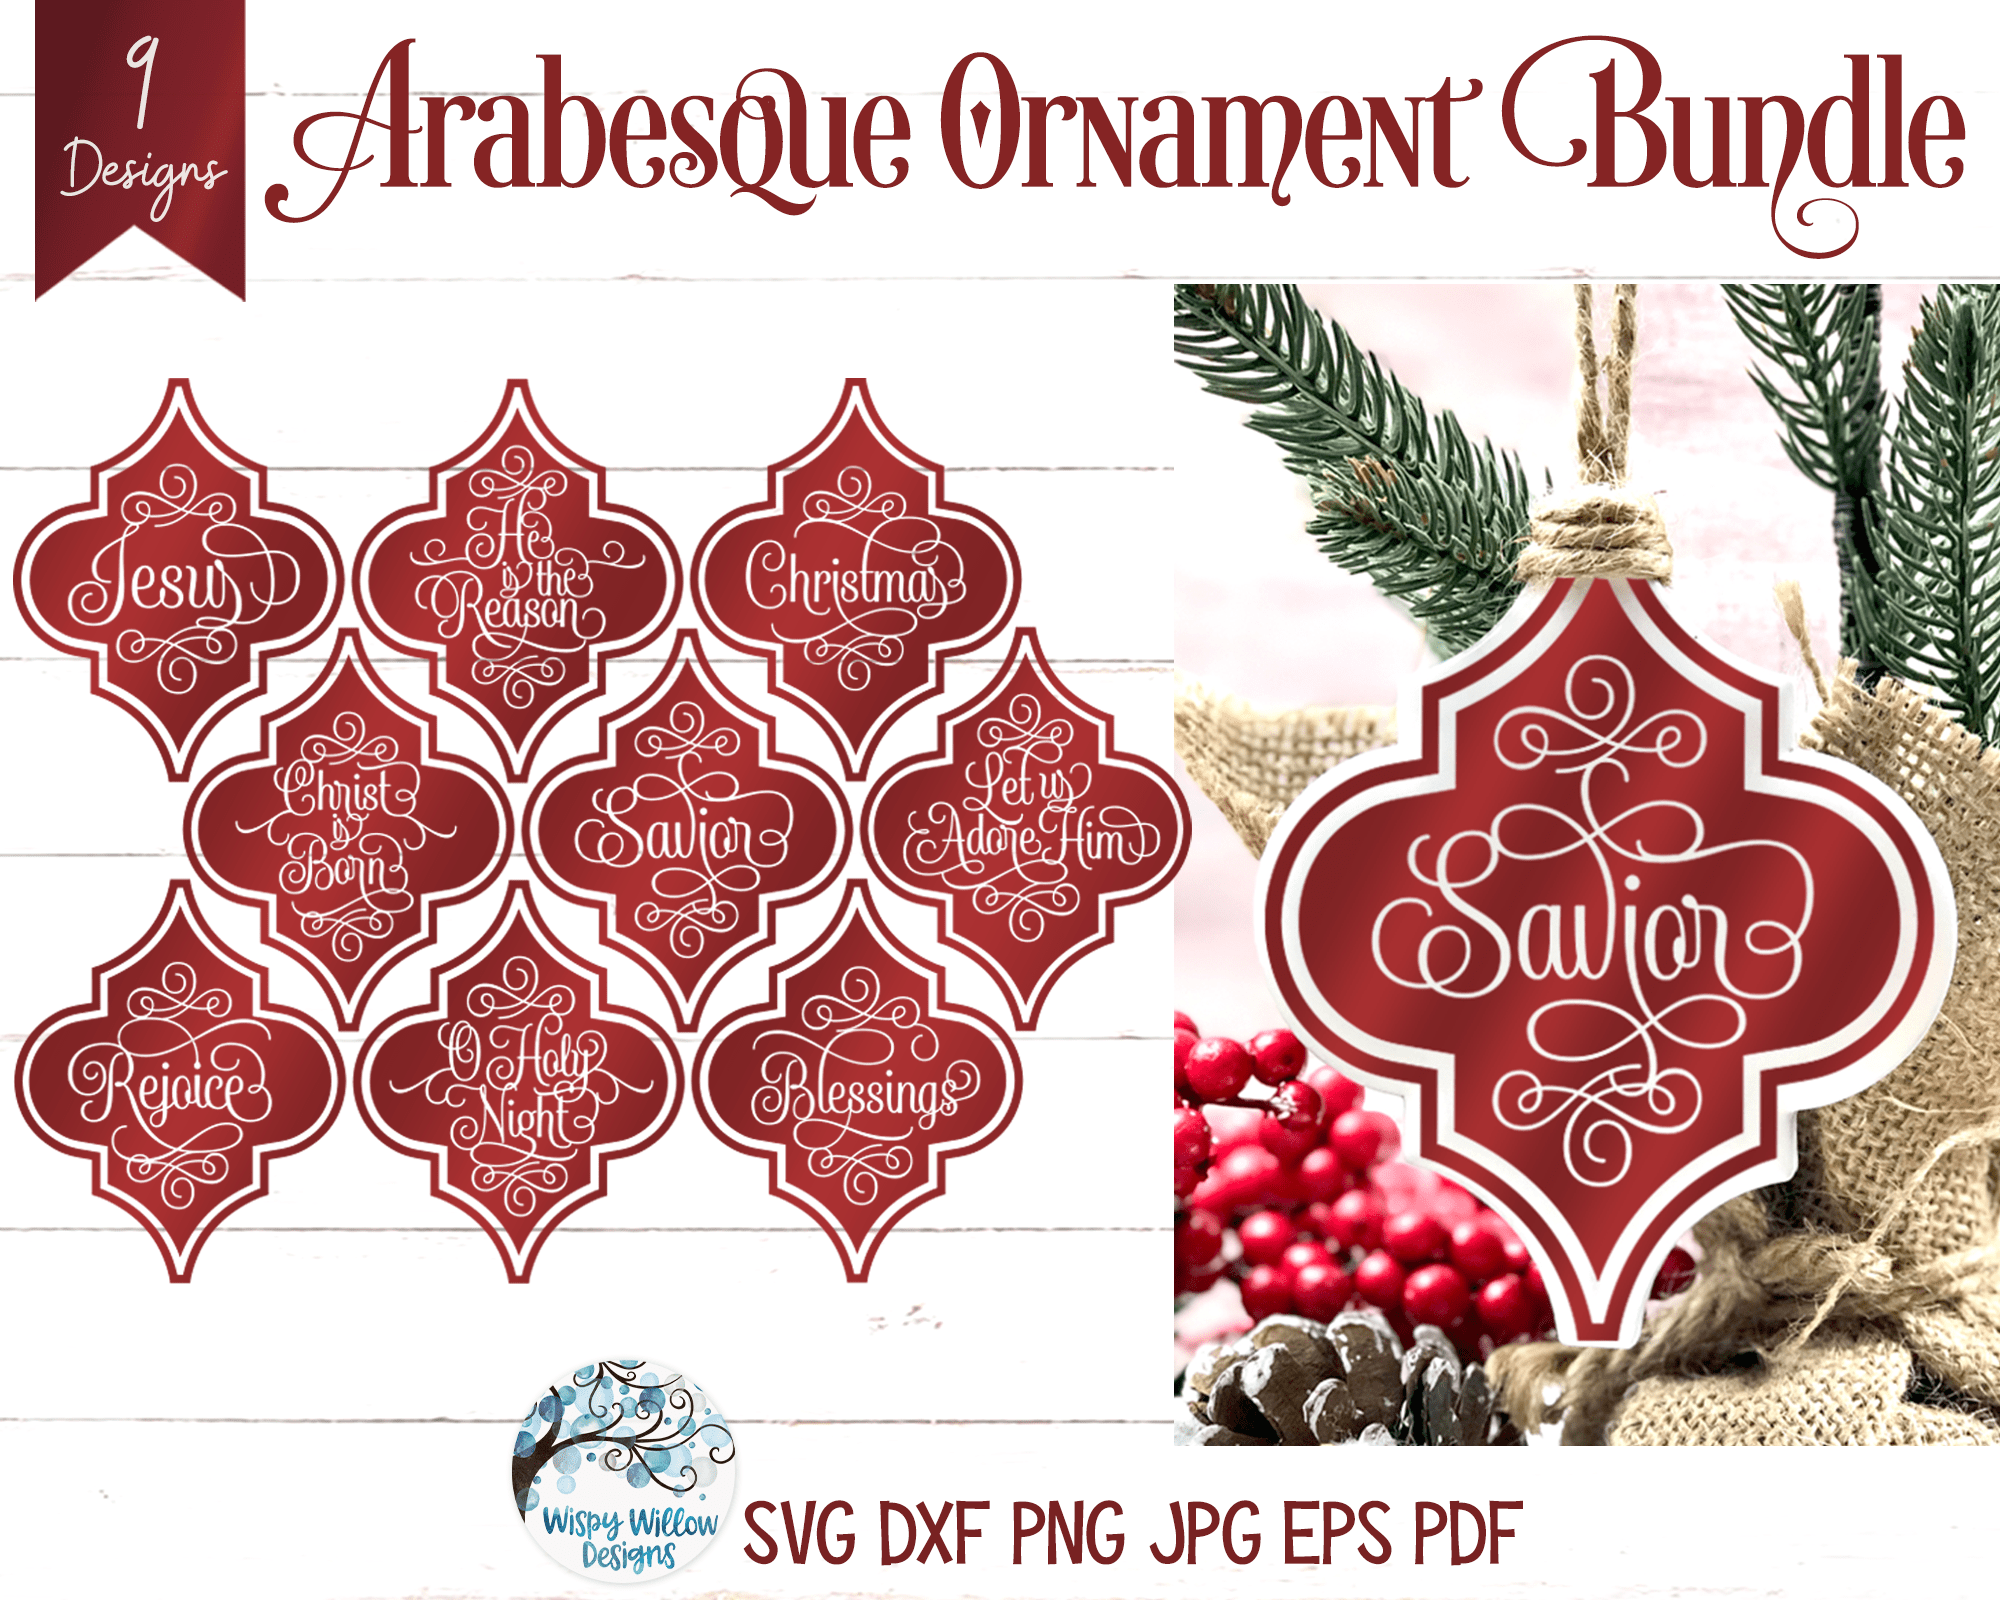 Religious Arabesque Ornament SVG Bundle - Vol 6 | Christmas Ornaments Wispy Willow Designs Company